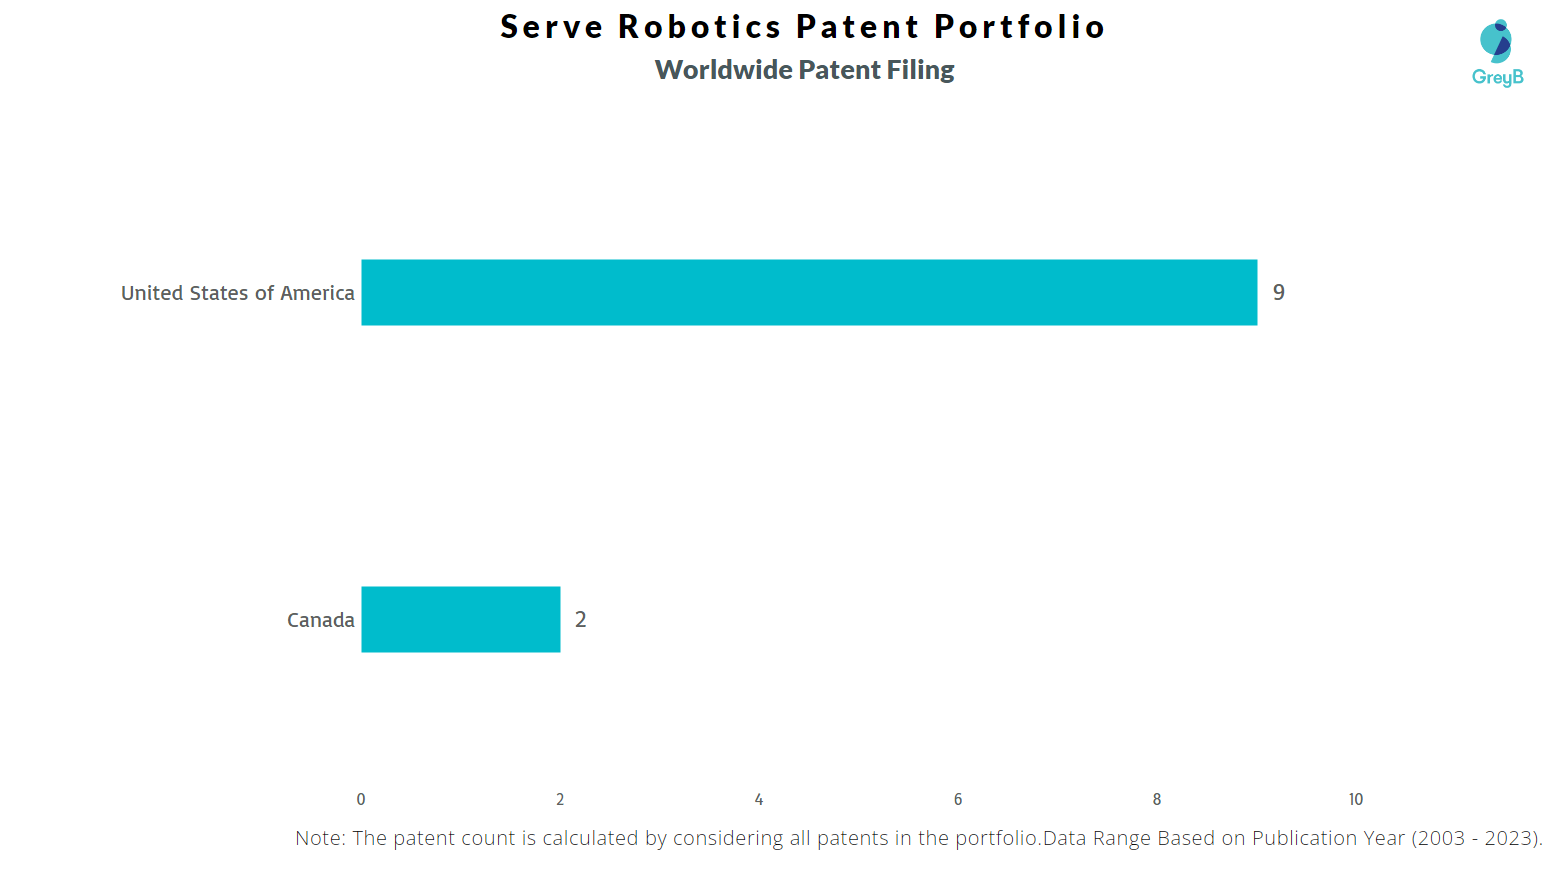 Serve Robotics Worldwide Patent Filing